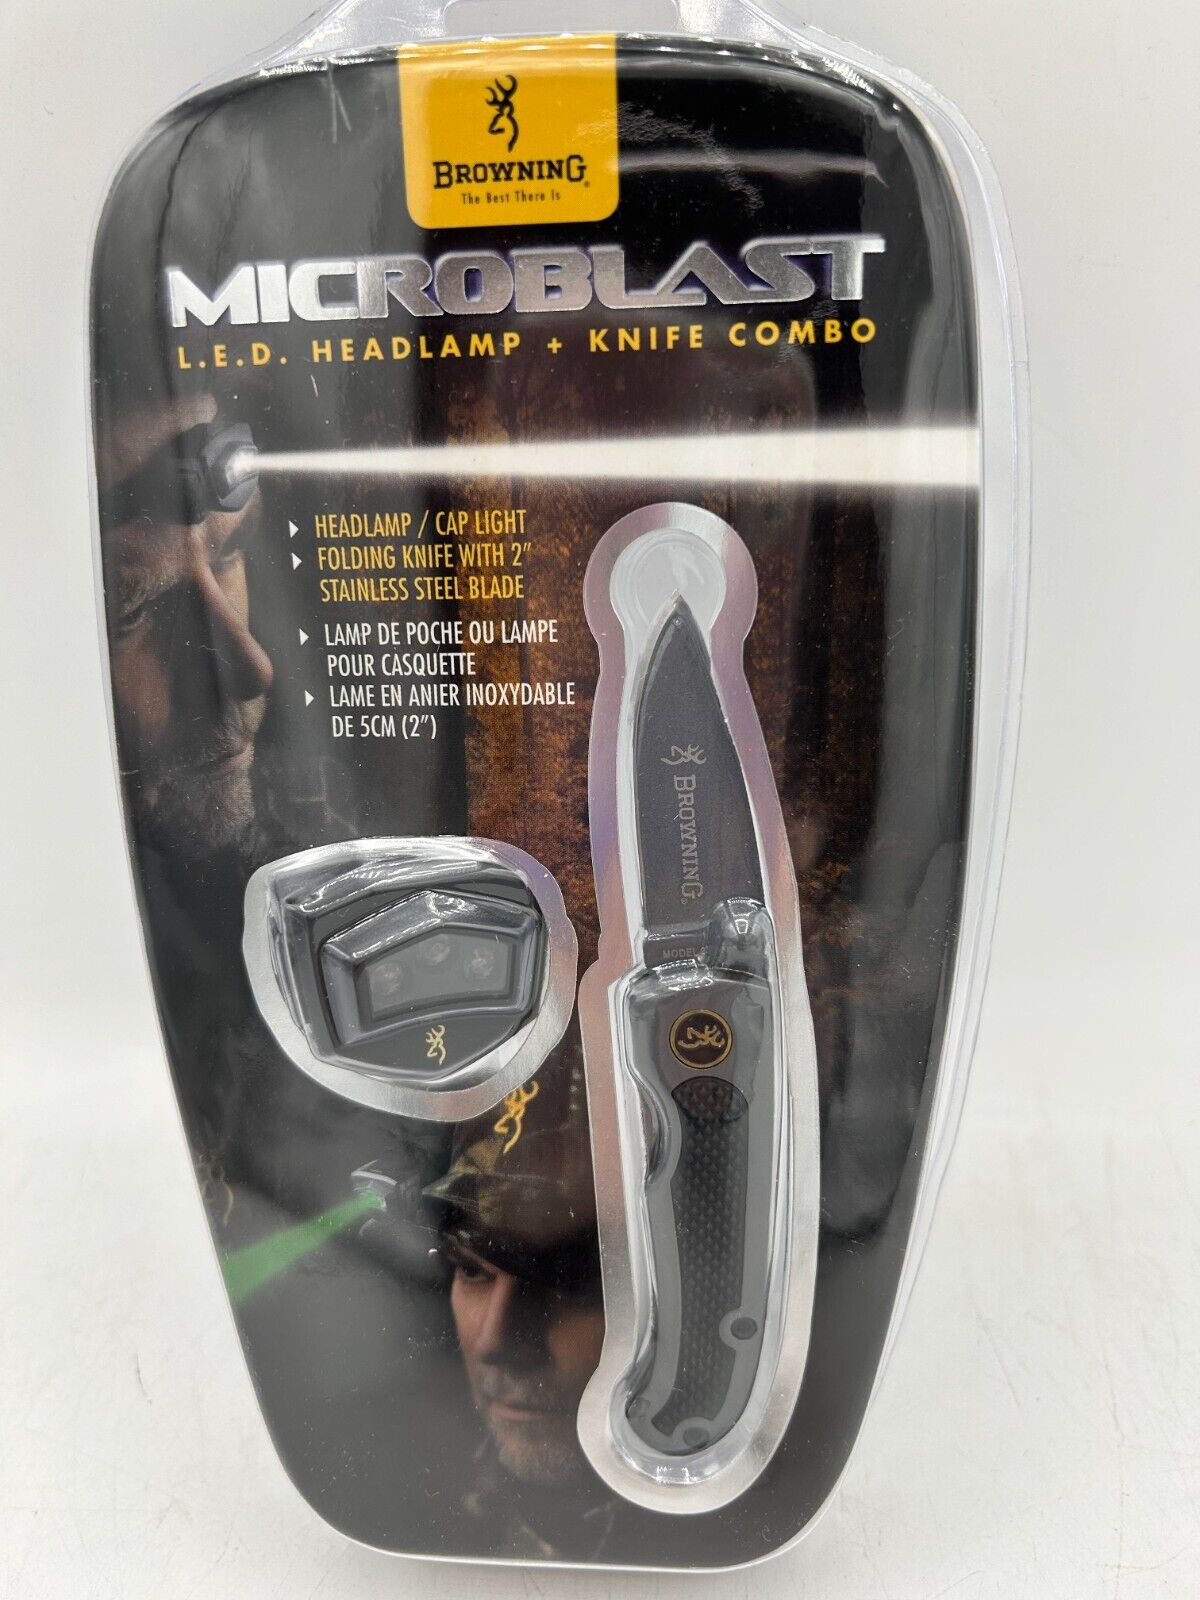 Browning Microblast L.E.D. Headlamp + Knife Combo #3712220